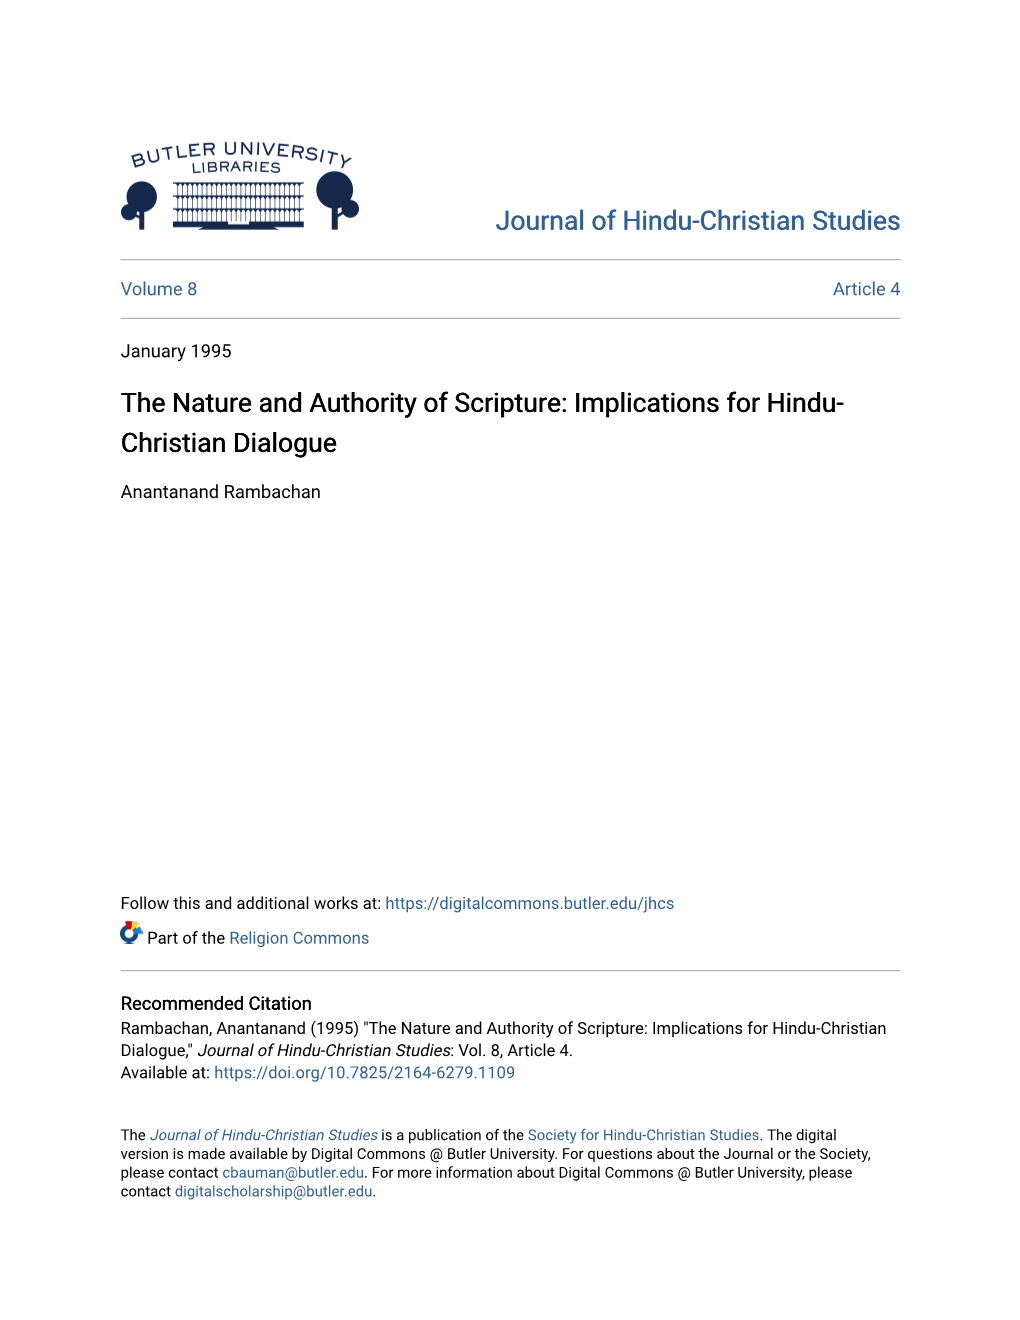 Implications for Hindu-Christian Dialogue," Journal of Hindu-Christian Studies: Vol